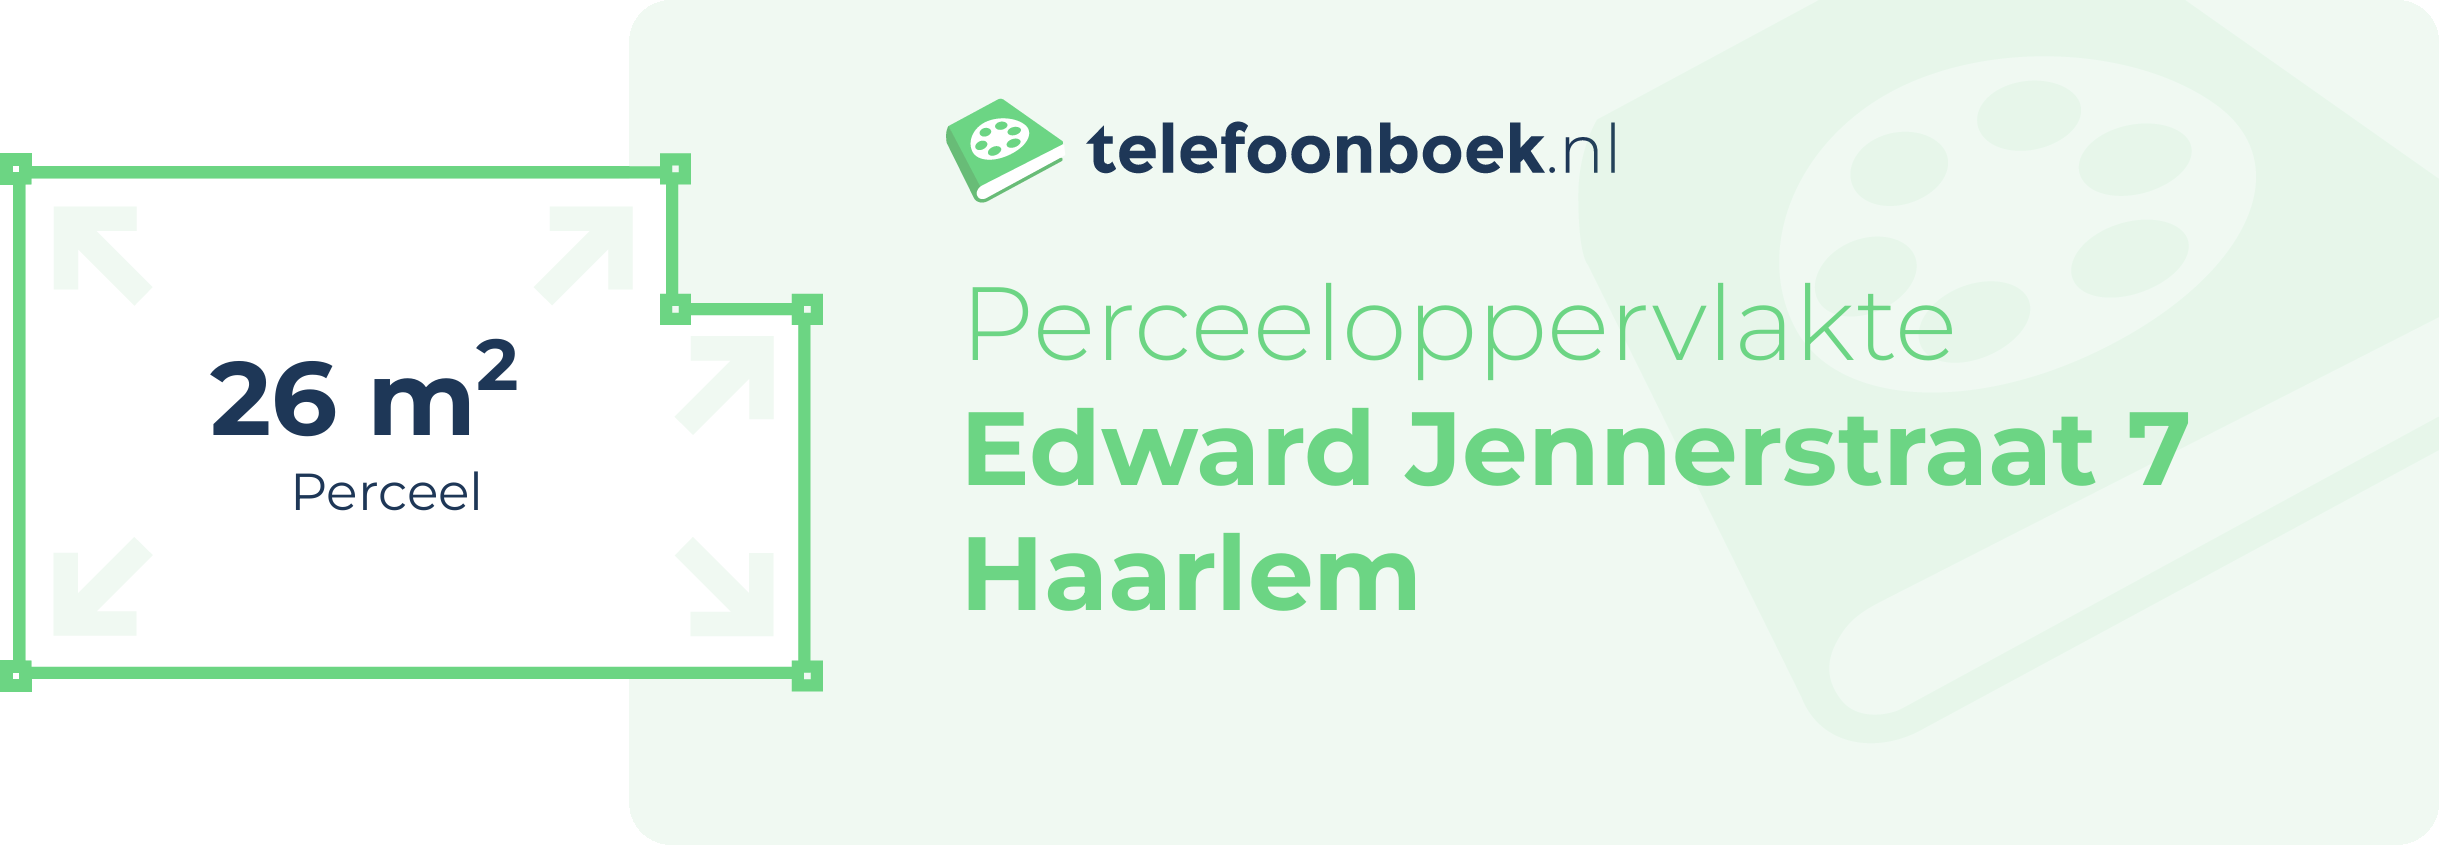 Perceeloppervlakte Edward Jennerstraat 7 Haarlem